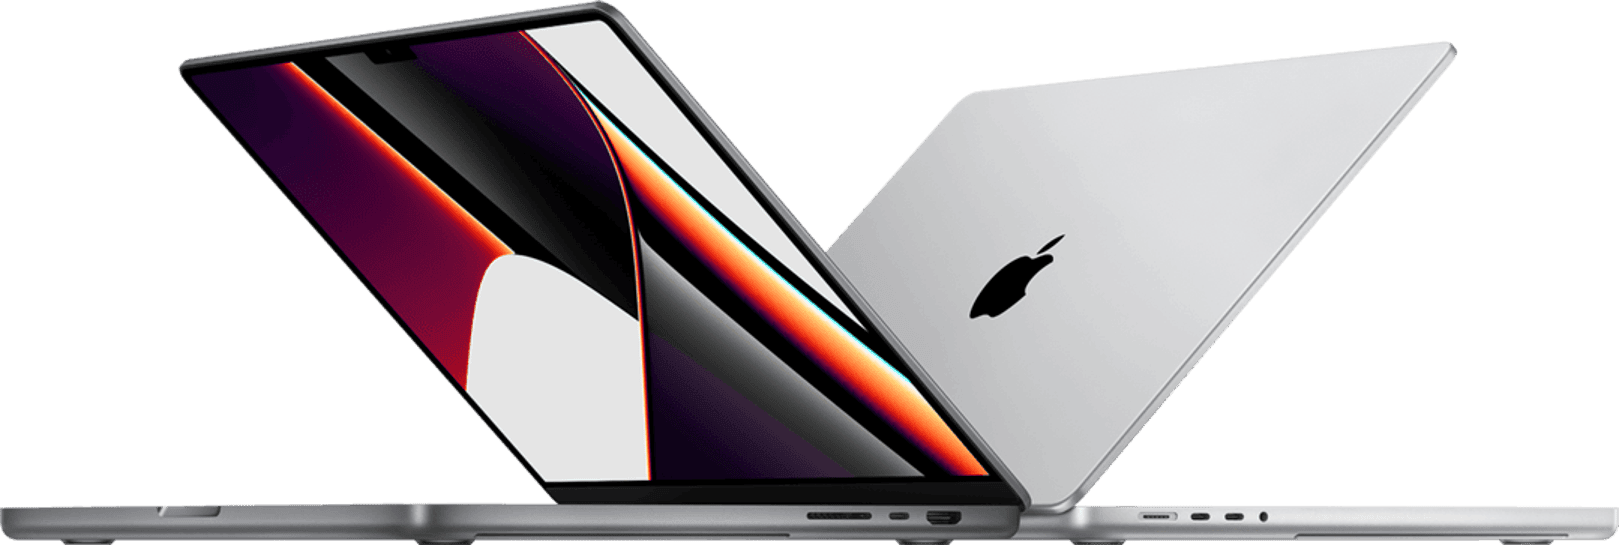 Apple macbook pro for sale in toronto merus ma12070